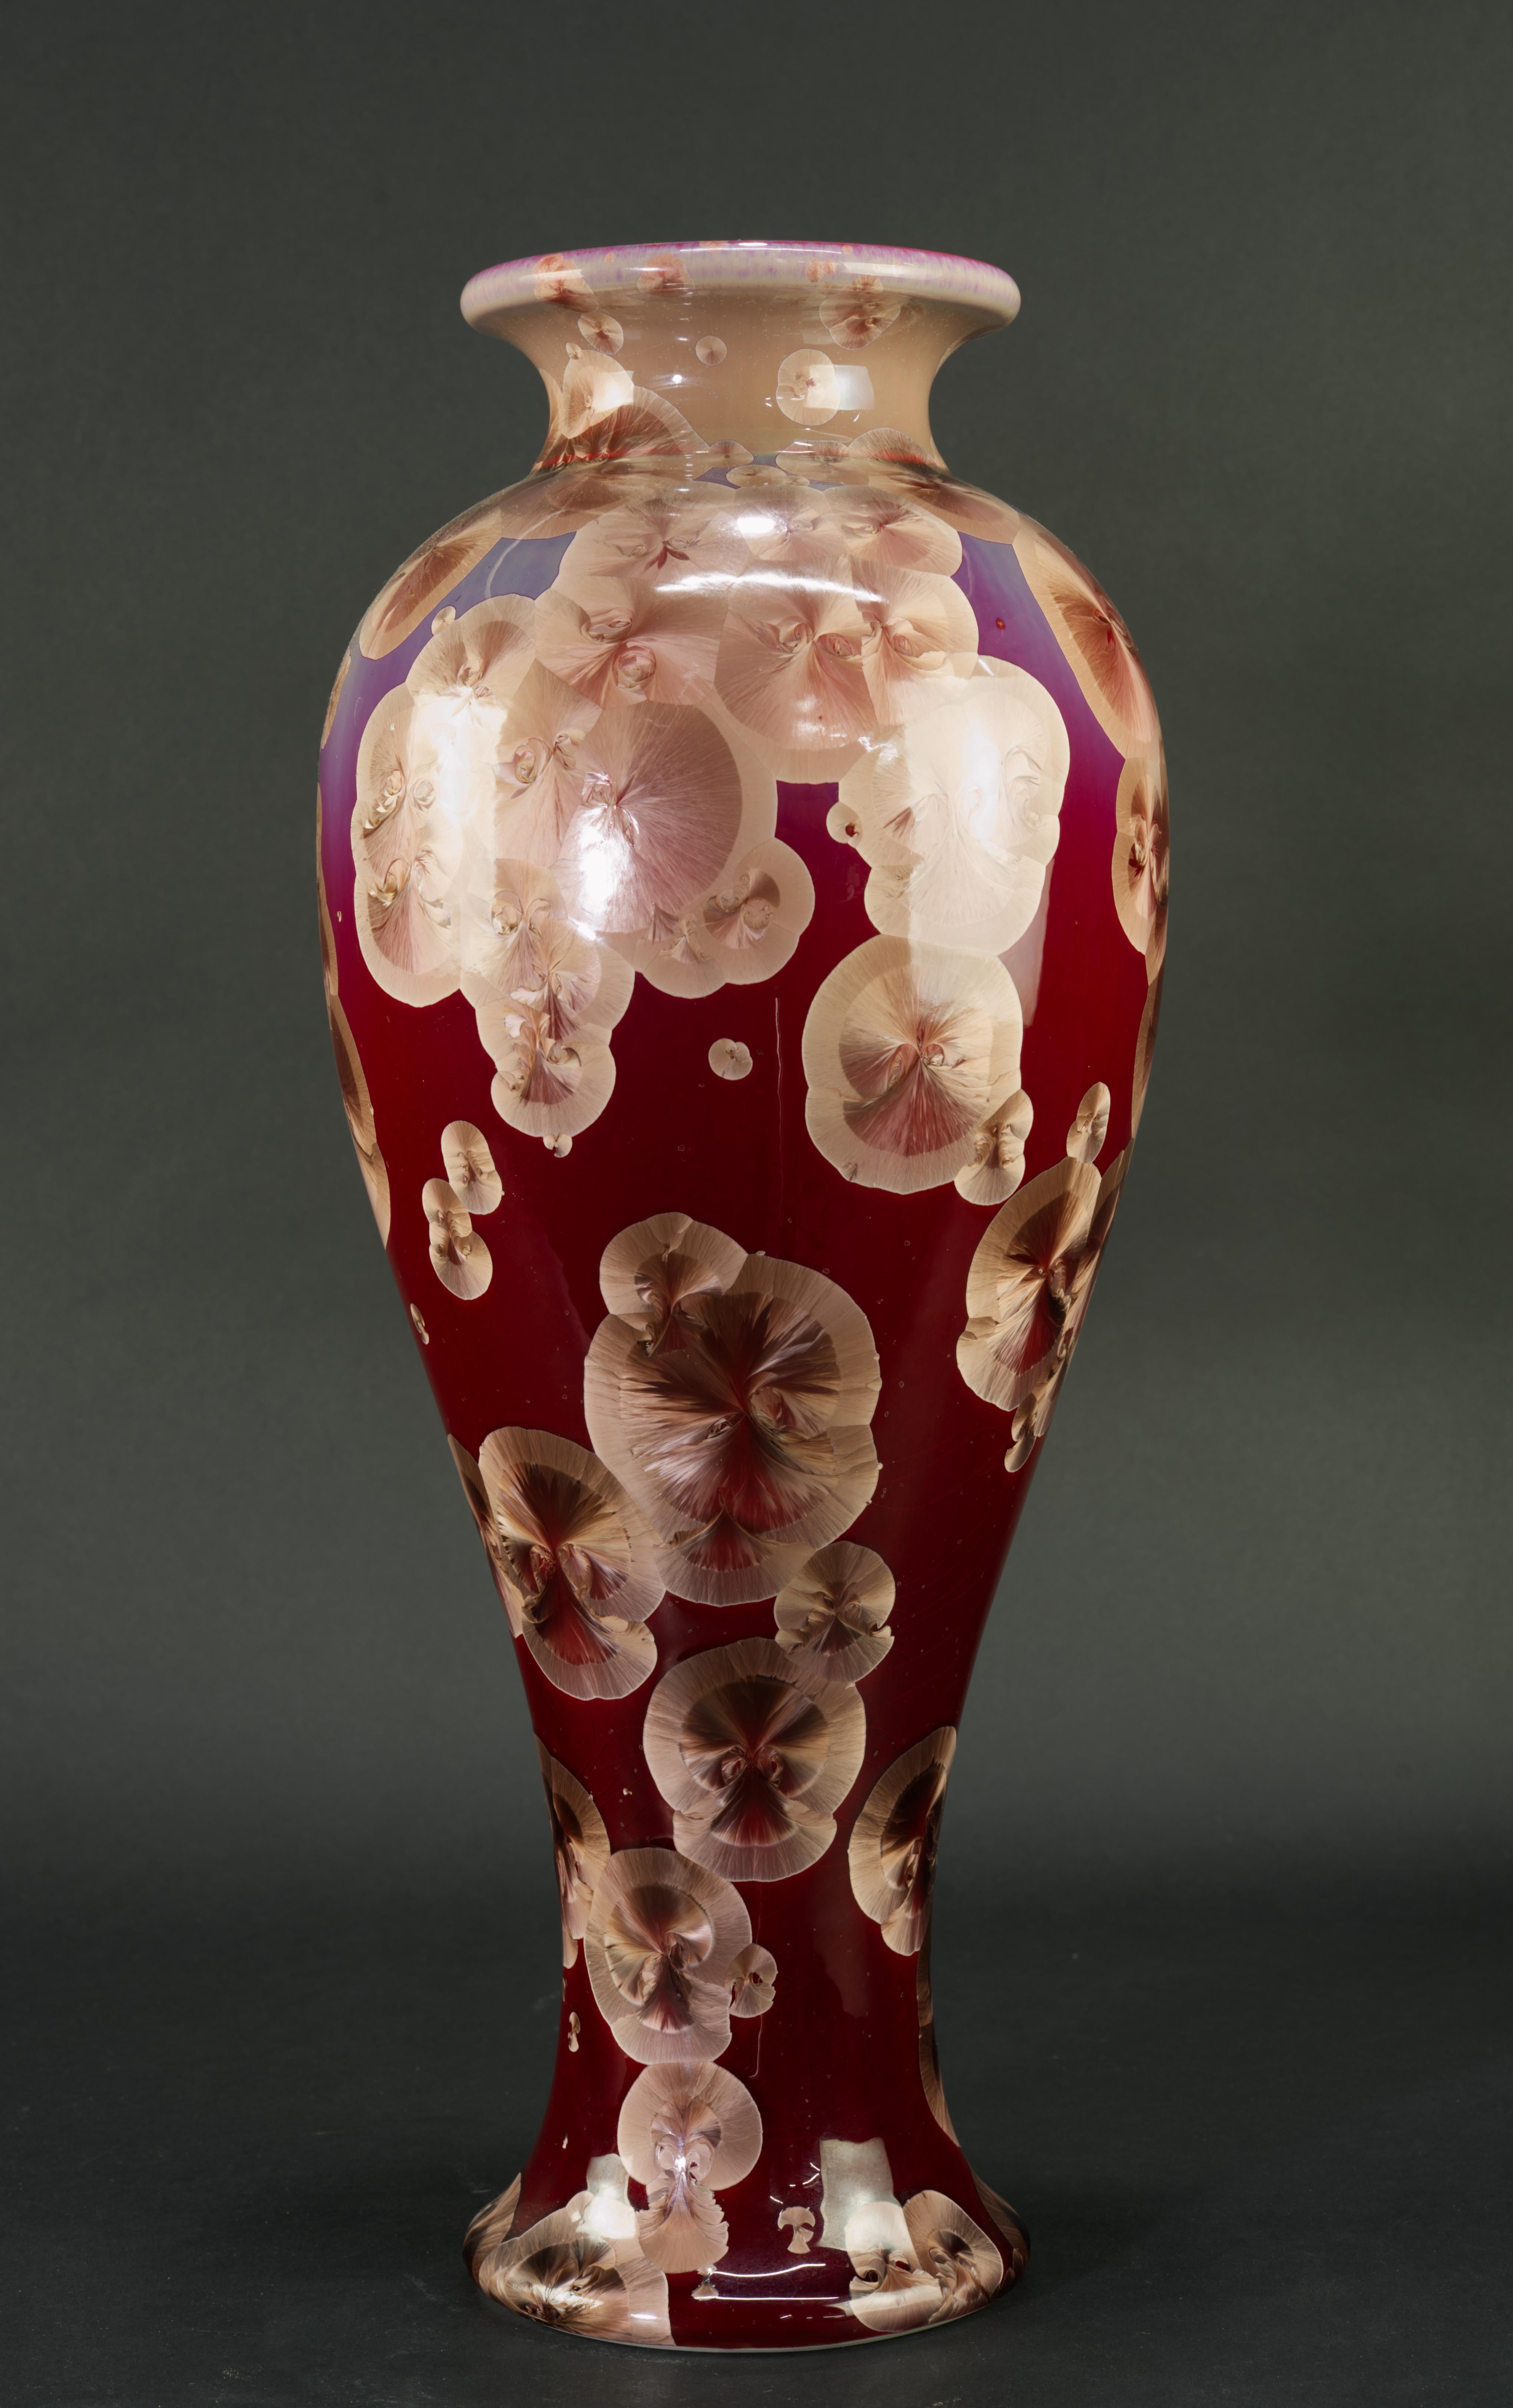 Glazed Crystalline Glaze Ceramic Vase, Red and Beige, American Art Studio Pottery For Sale